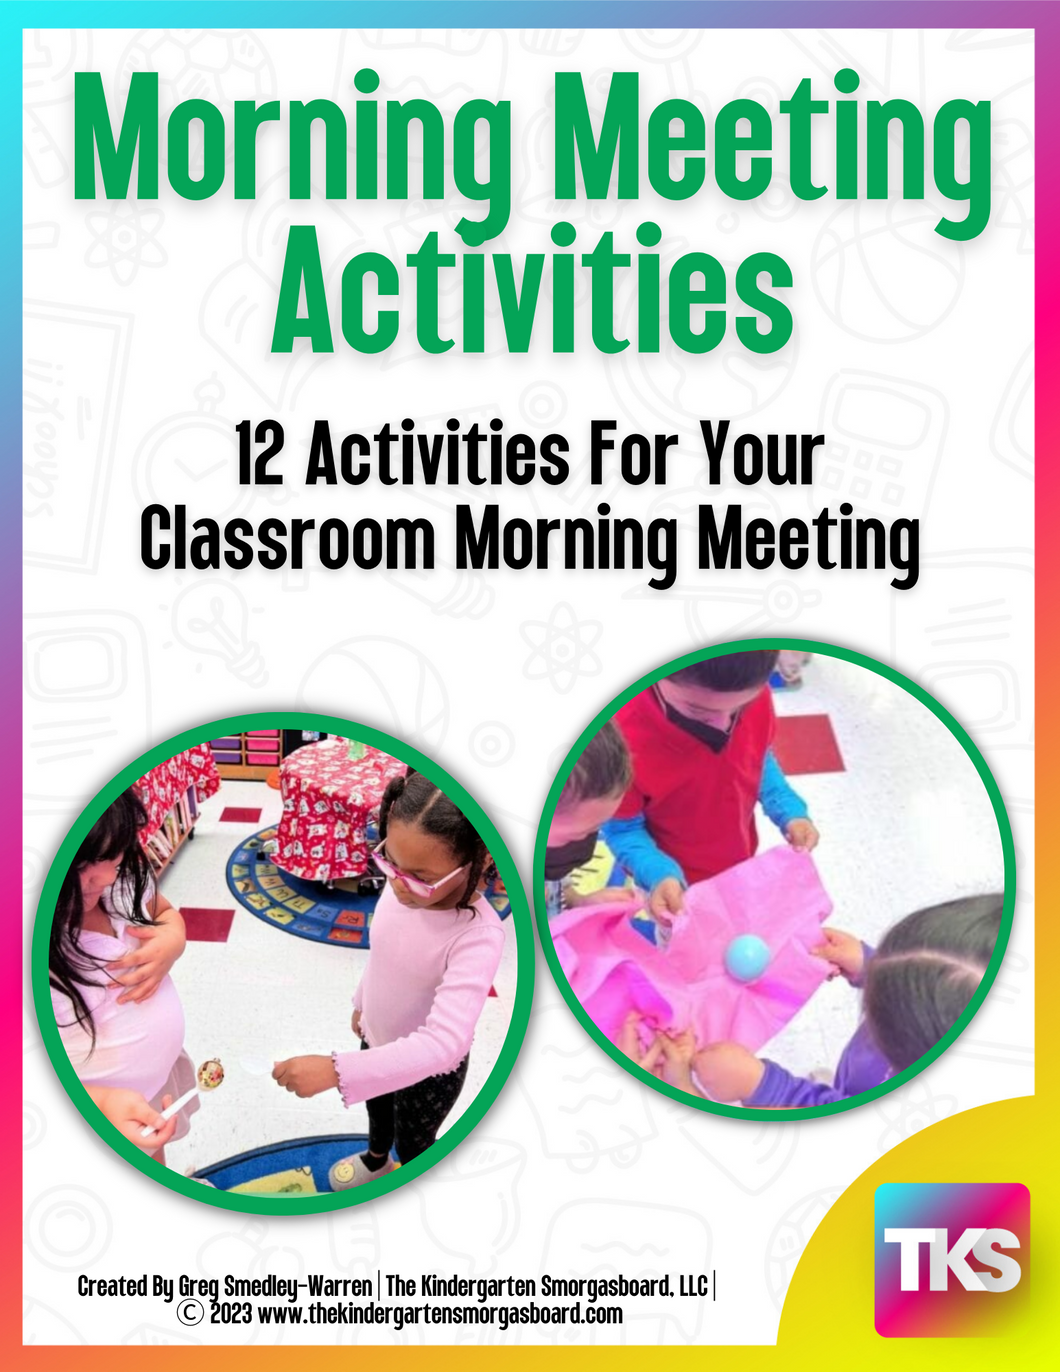 Morning Meeting Activities